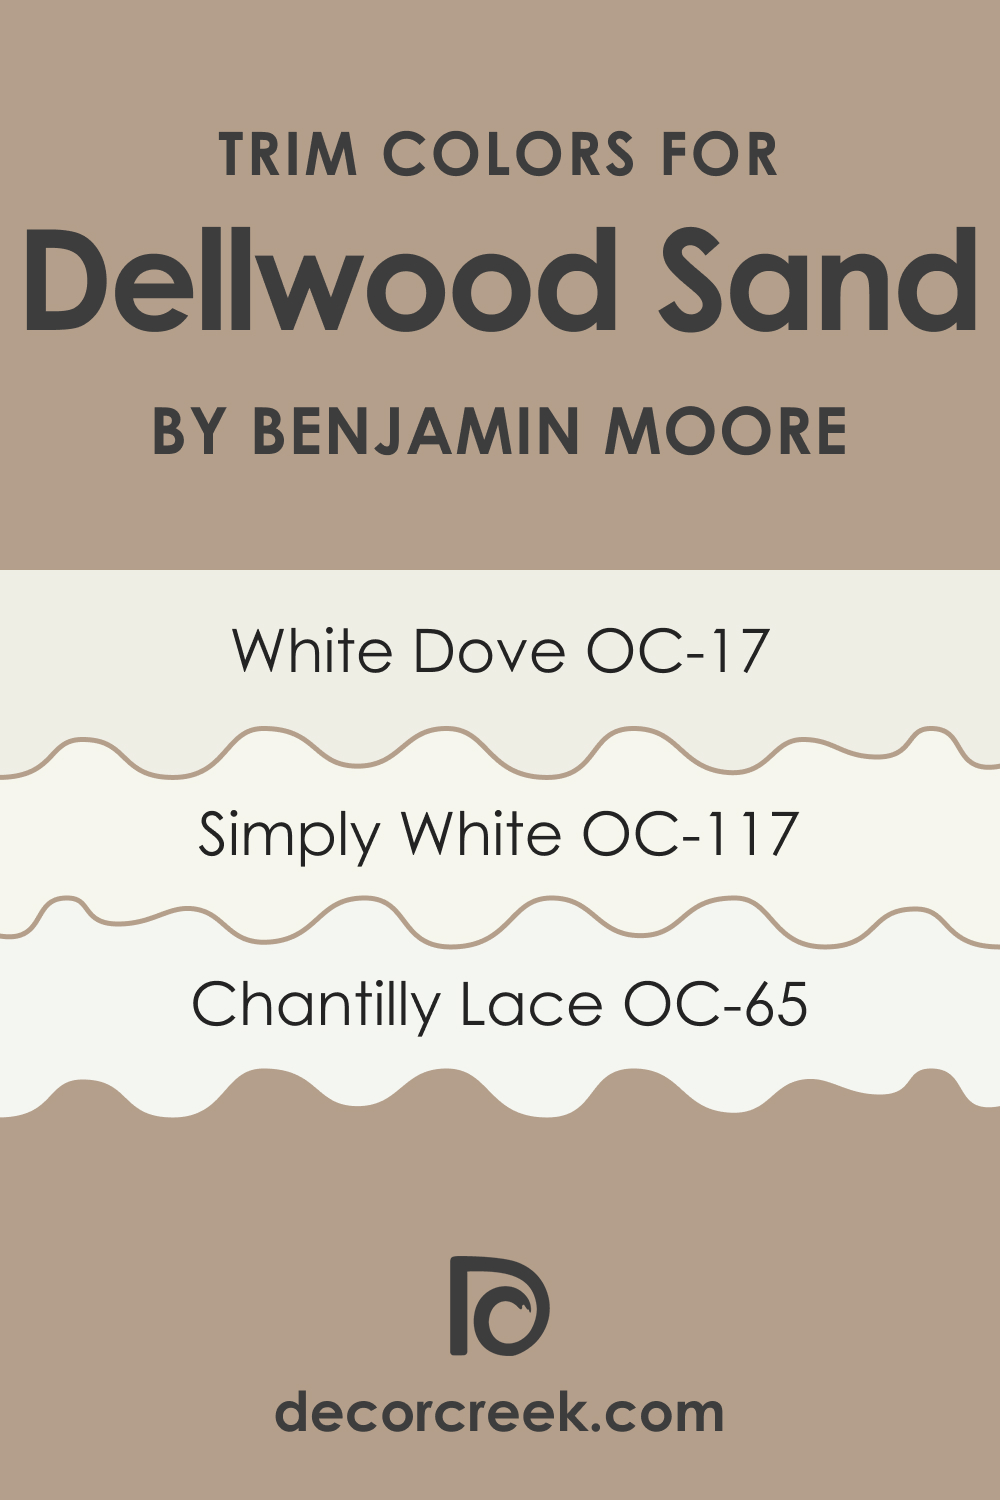 Trim Colors of Dellwood Sand 1019